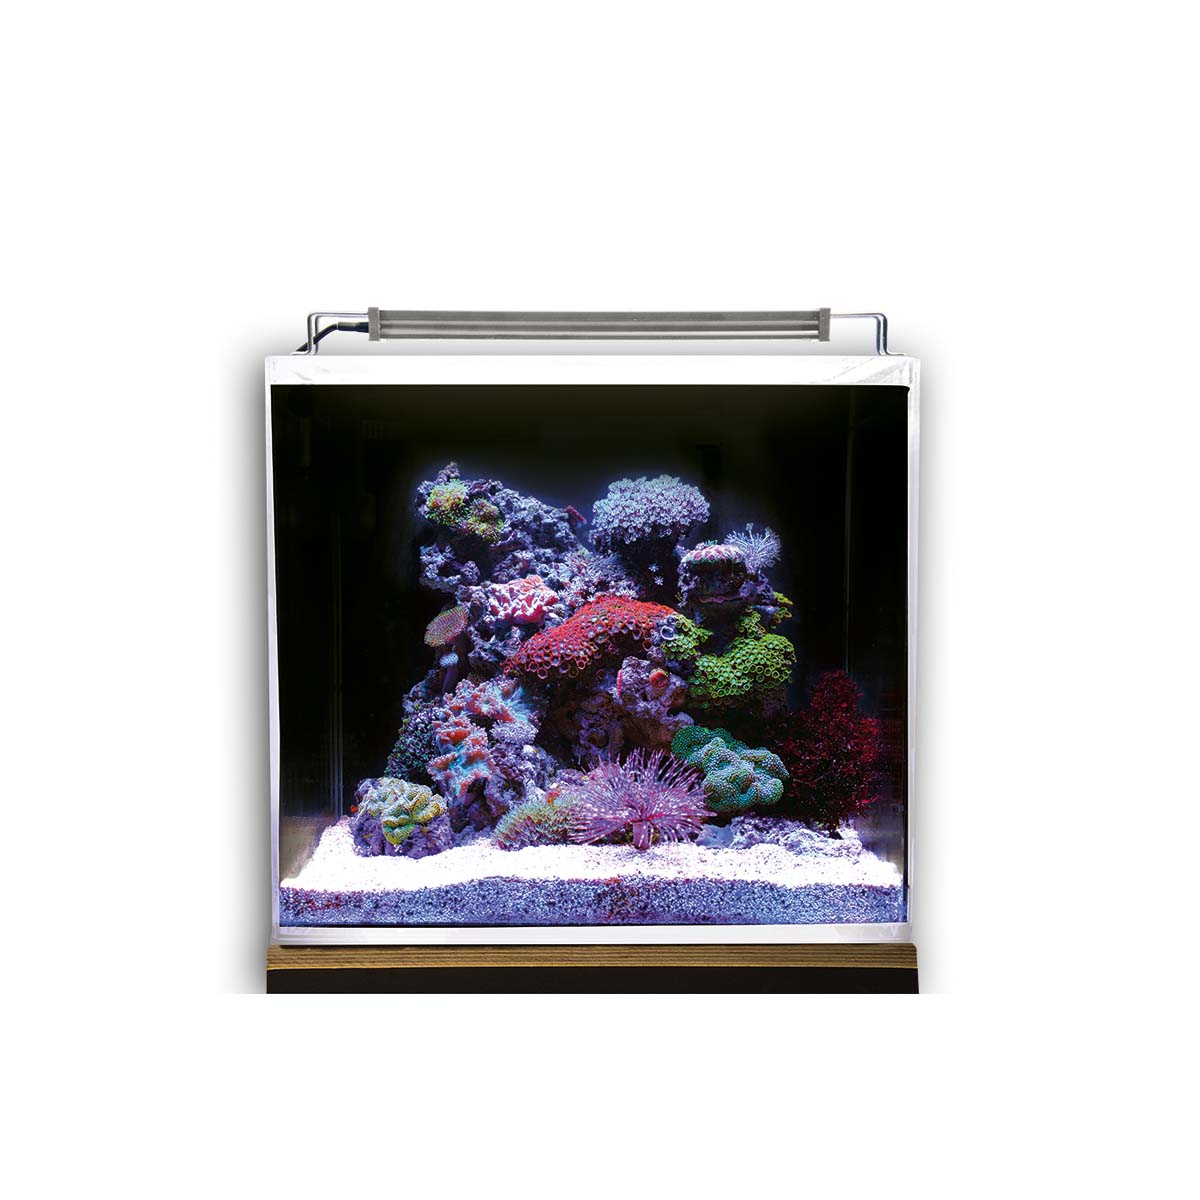 Dupla Marin akvárium s mořskou vodou Ocean Cube 50, sada